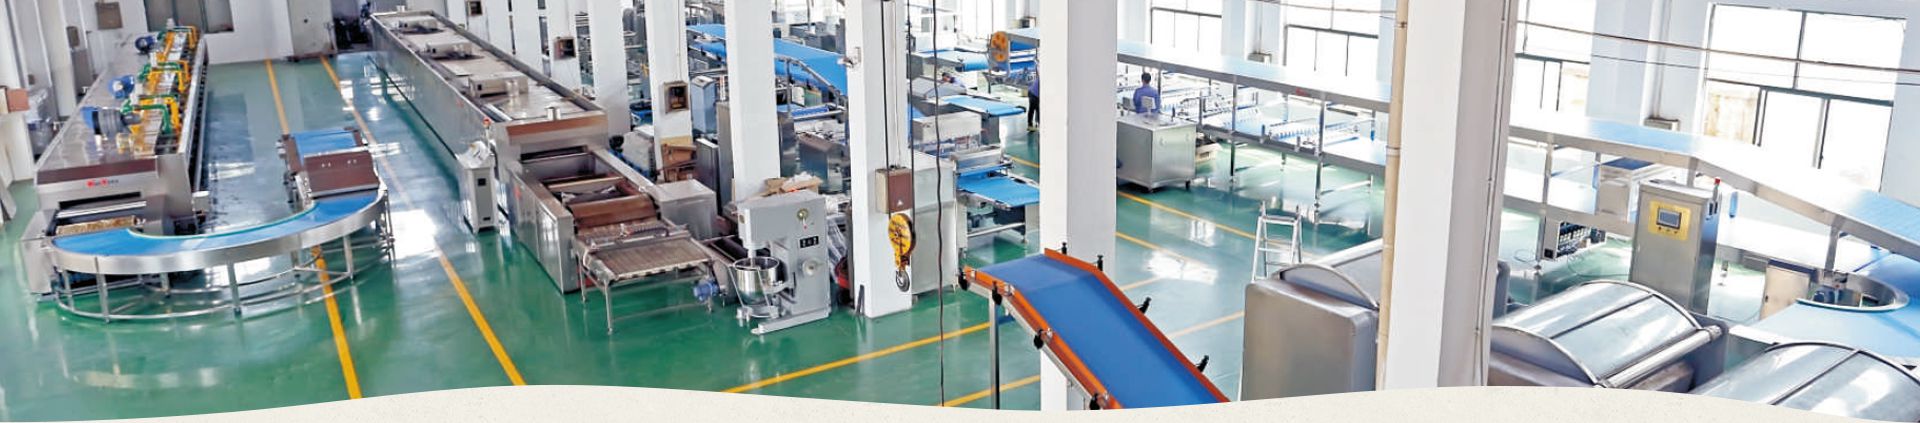 Shanghai Kuihong Machinery Manufacturer Co., Ltd.